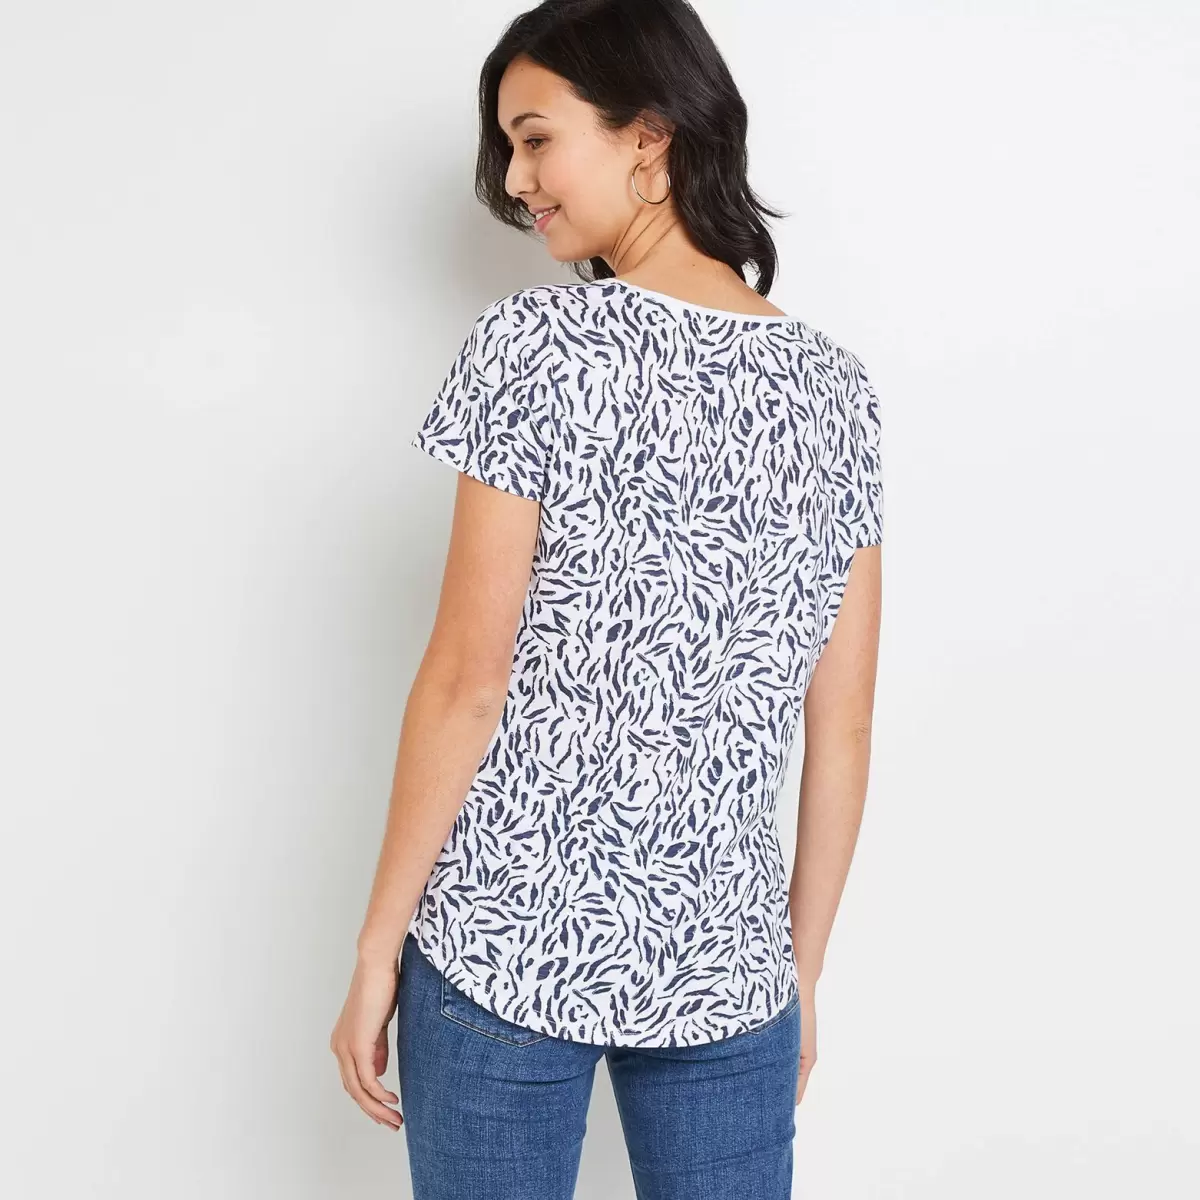 Tarif Grain De Malic Femme T-Shirt Imprimé Col V Femme T-Shirts & Tops Blanc Casse - 1